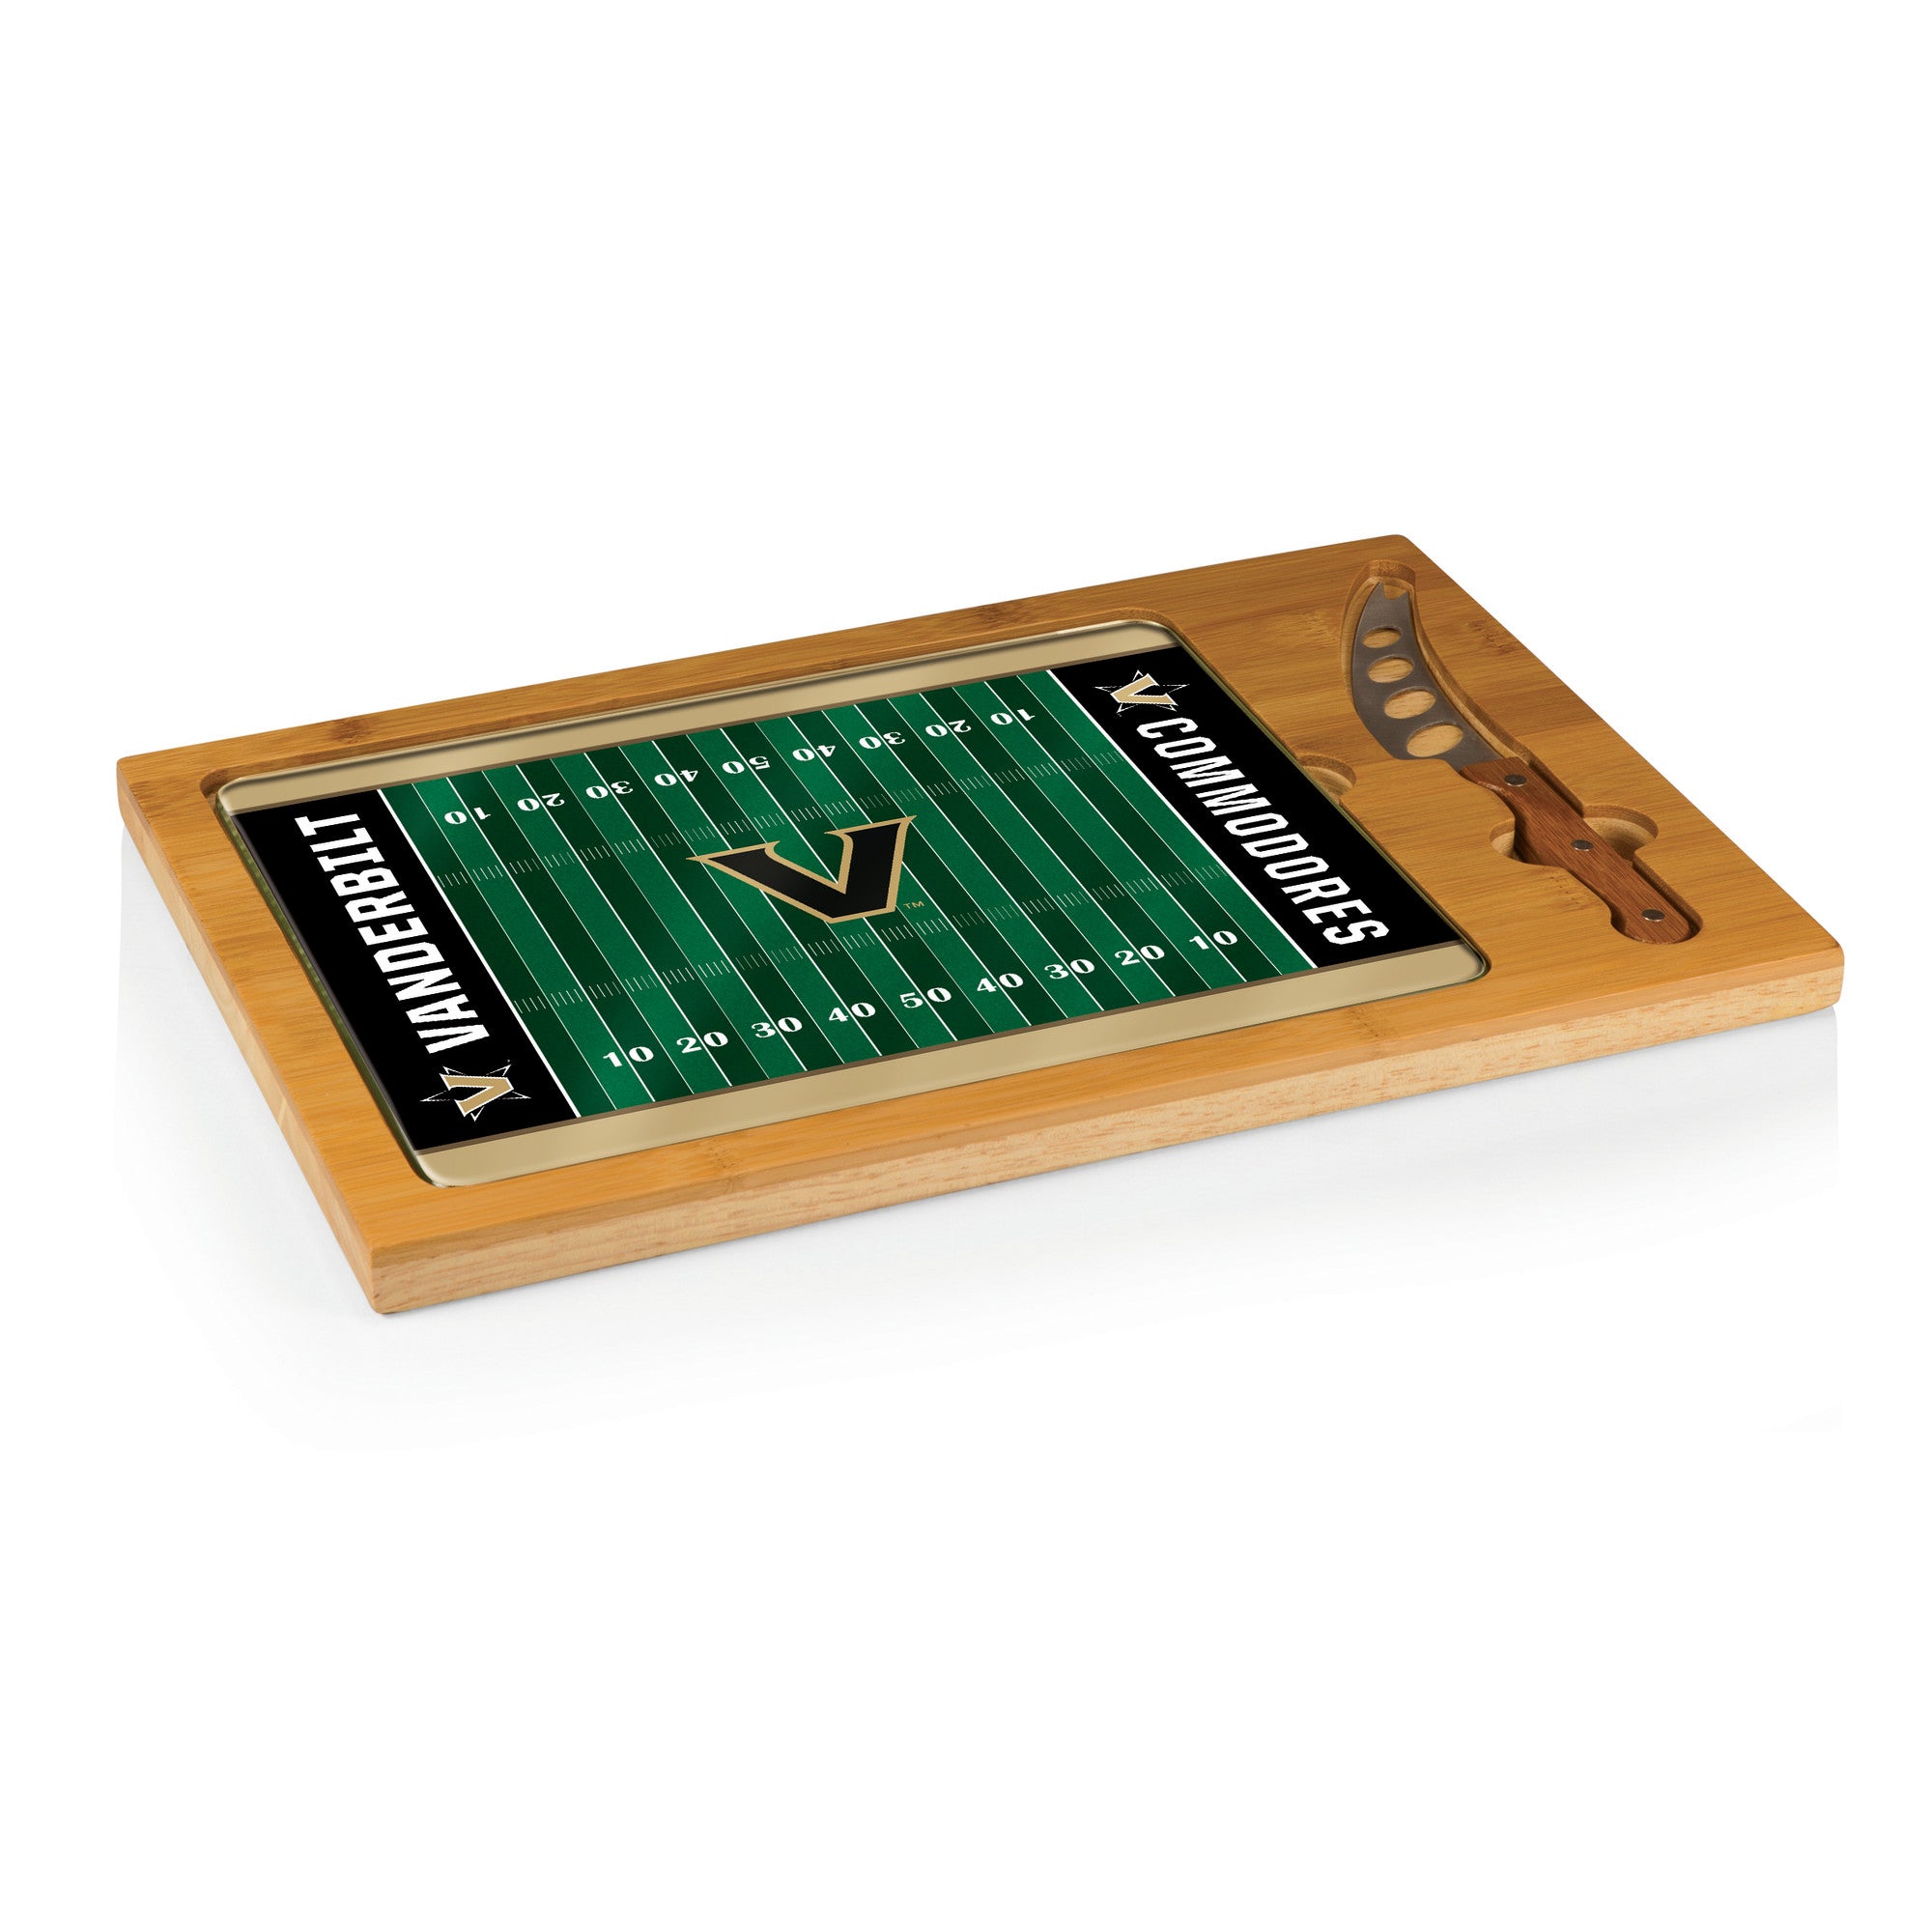 Vanderbilt Commodores Football Field - Icon Glass Top Cutting Board & Knife Set